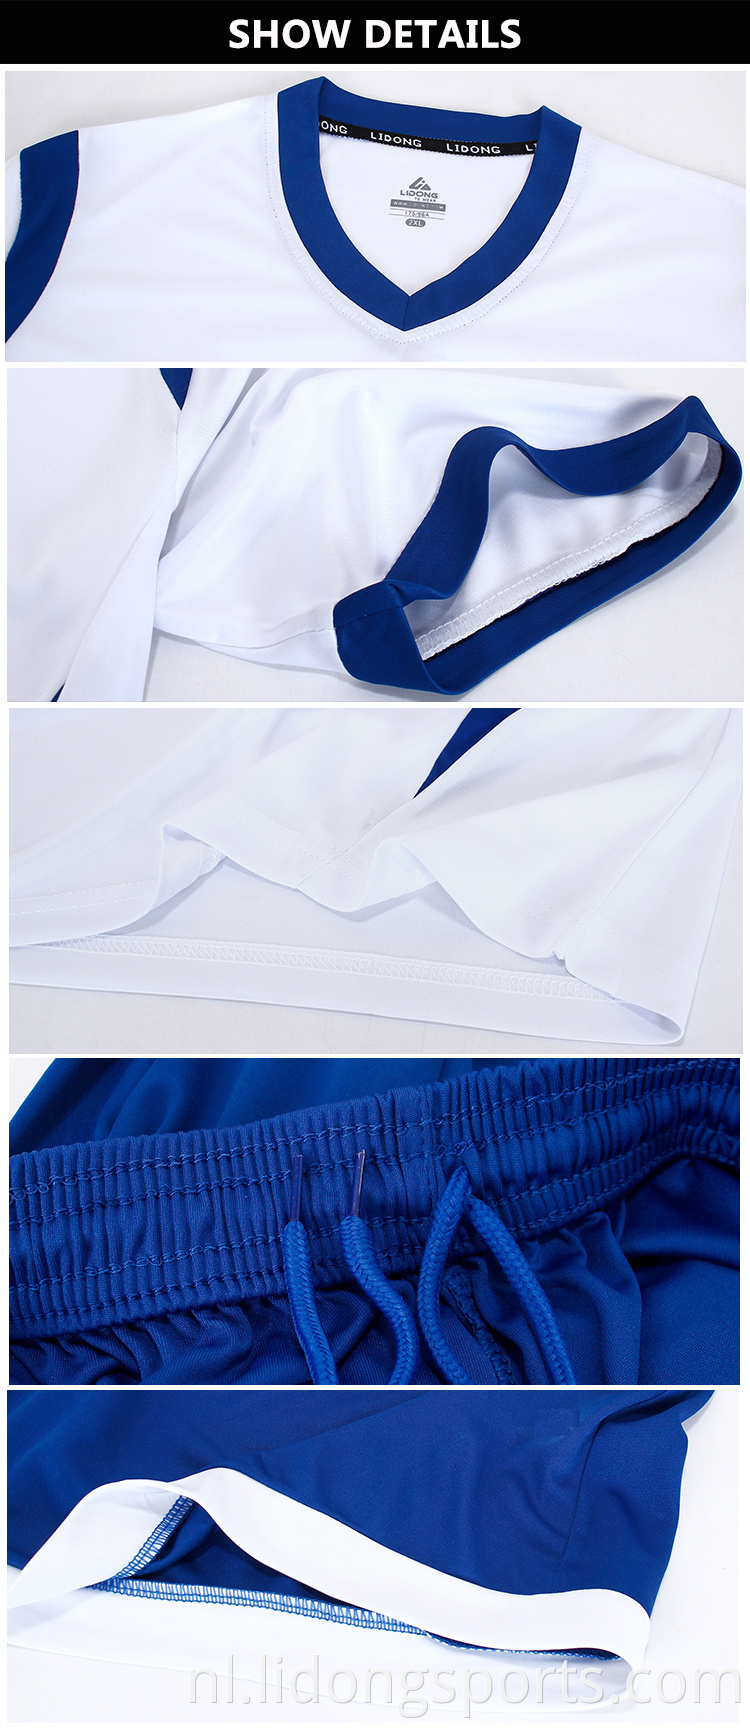 Unieke Custom Design Sublimated Football Jersey Groothandel Soccer Uniform Kit